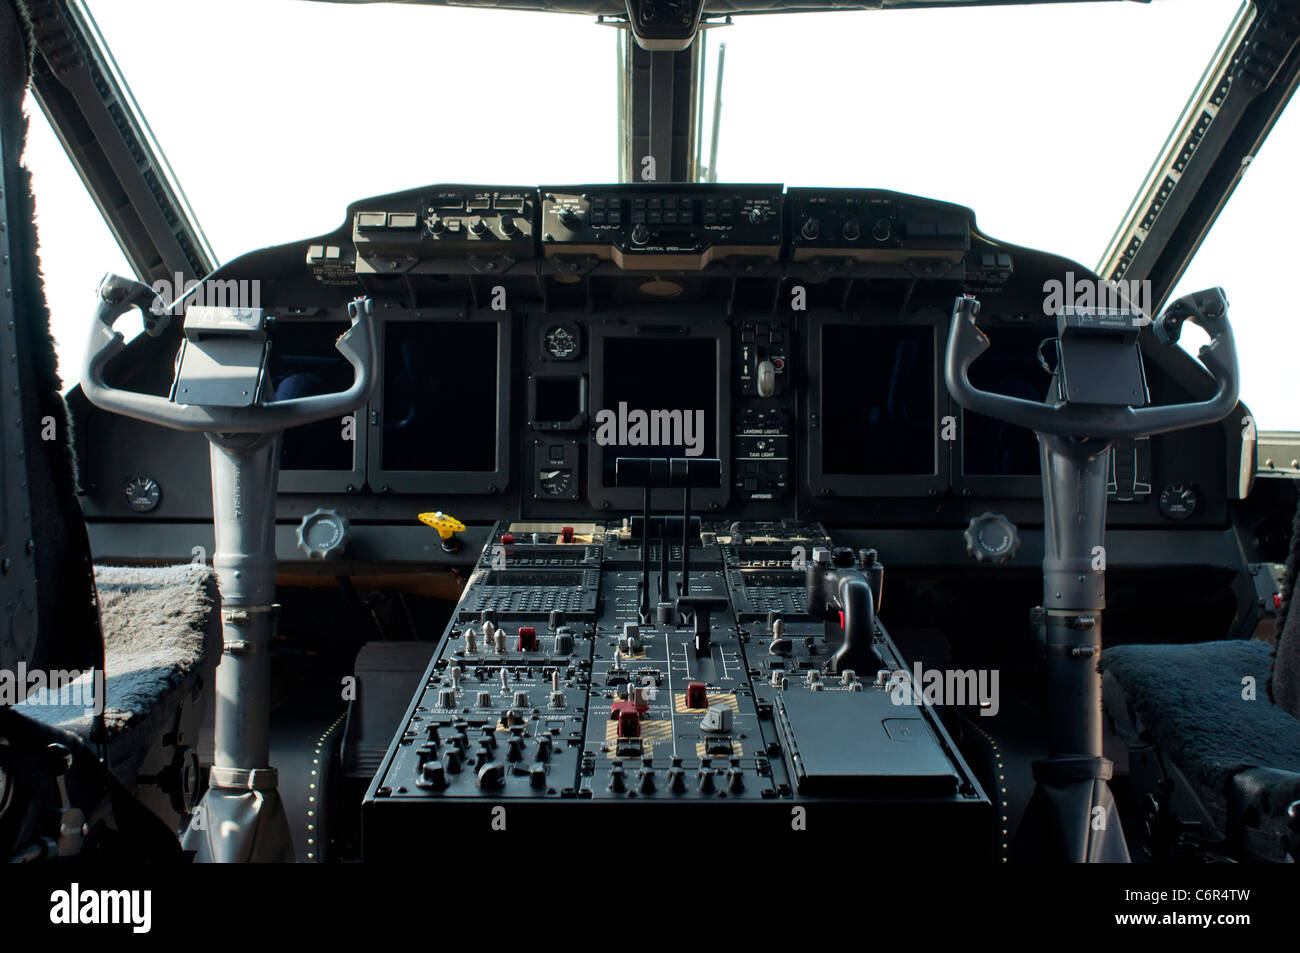 Cockpit of a military aircraft. Horizontal image Stock Photo